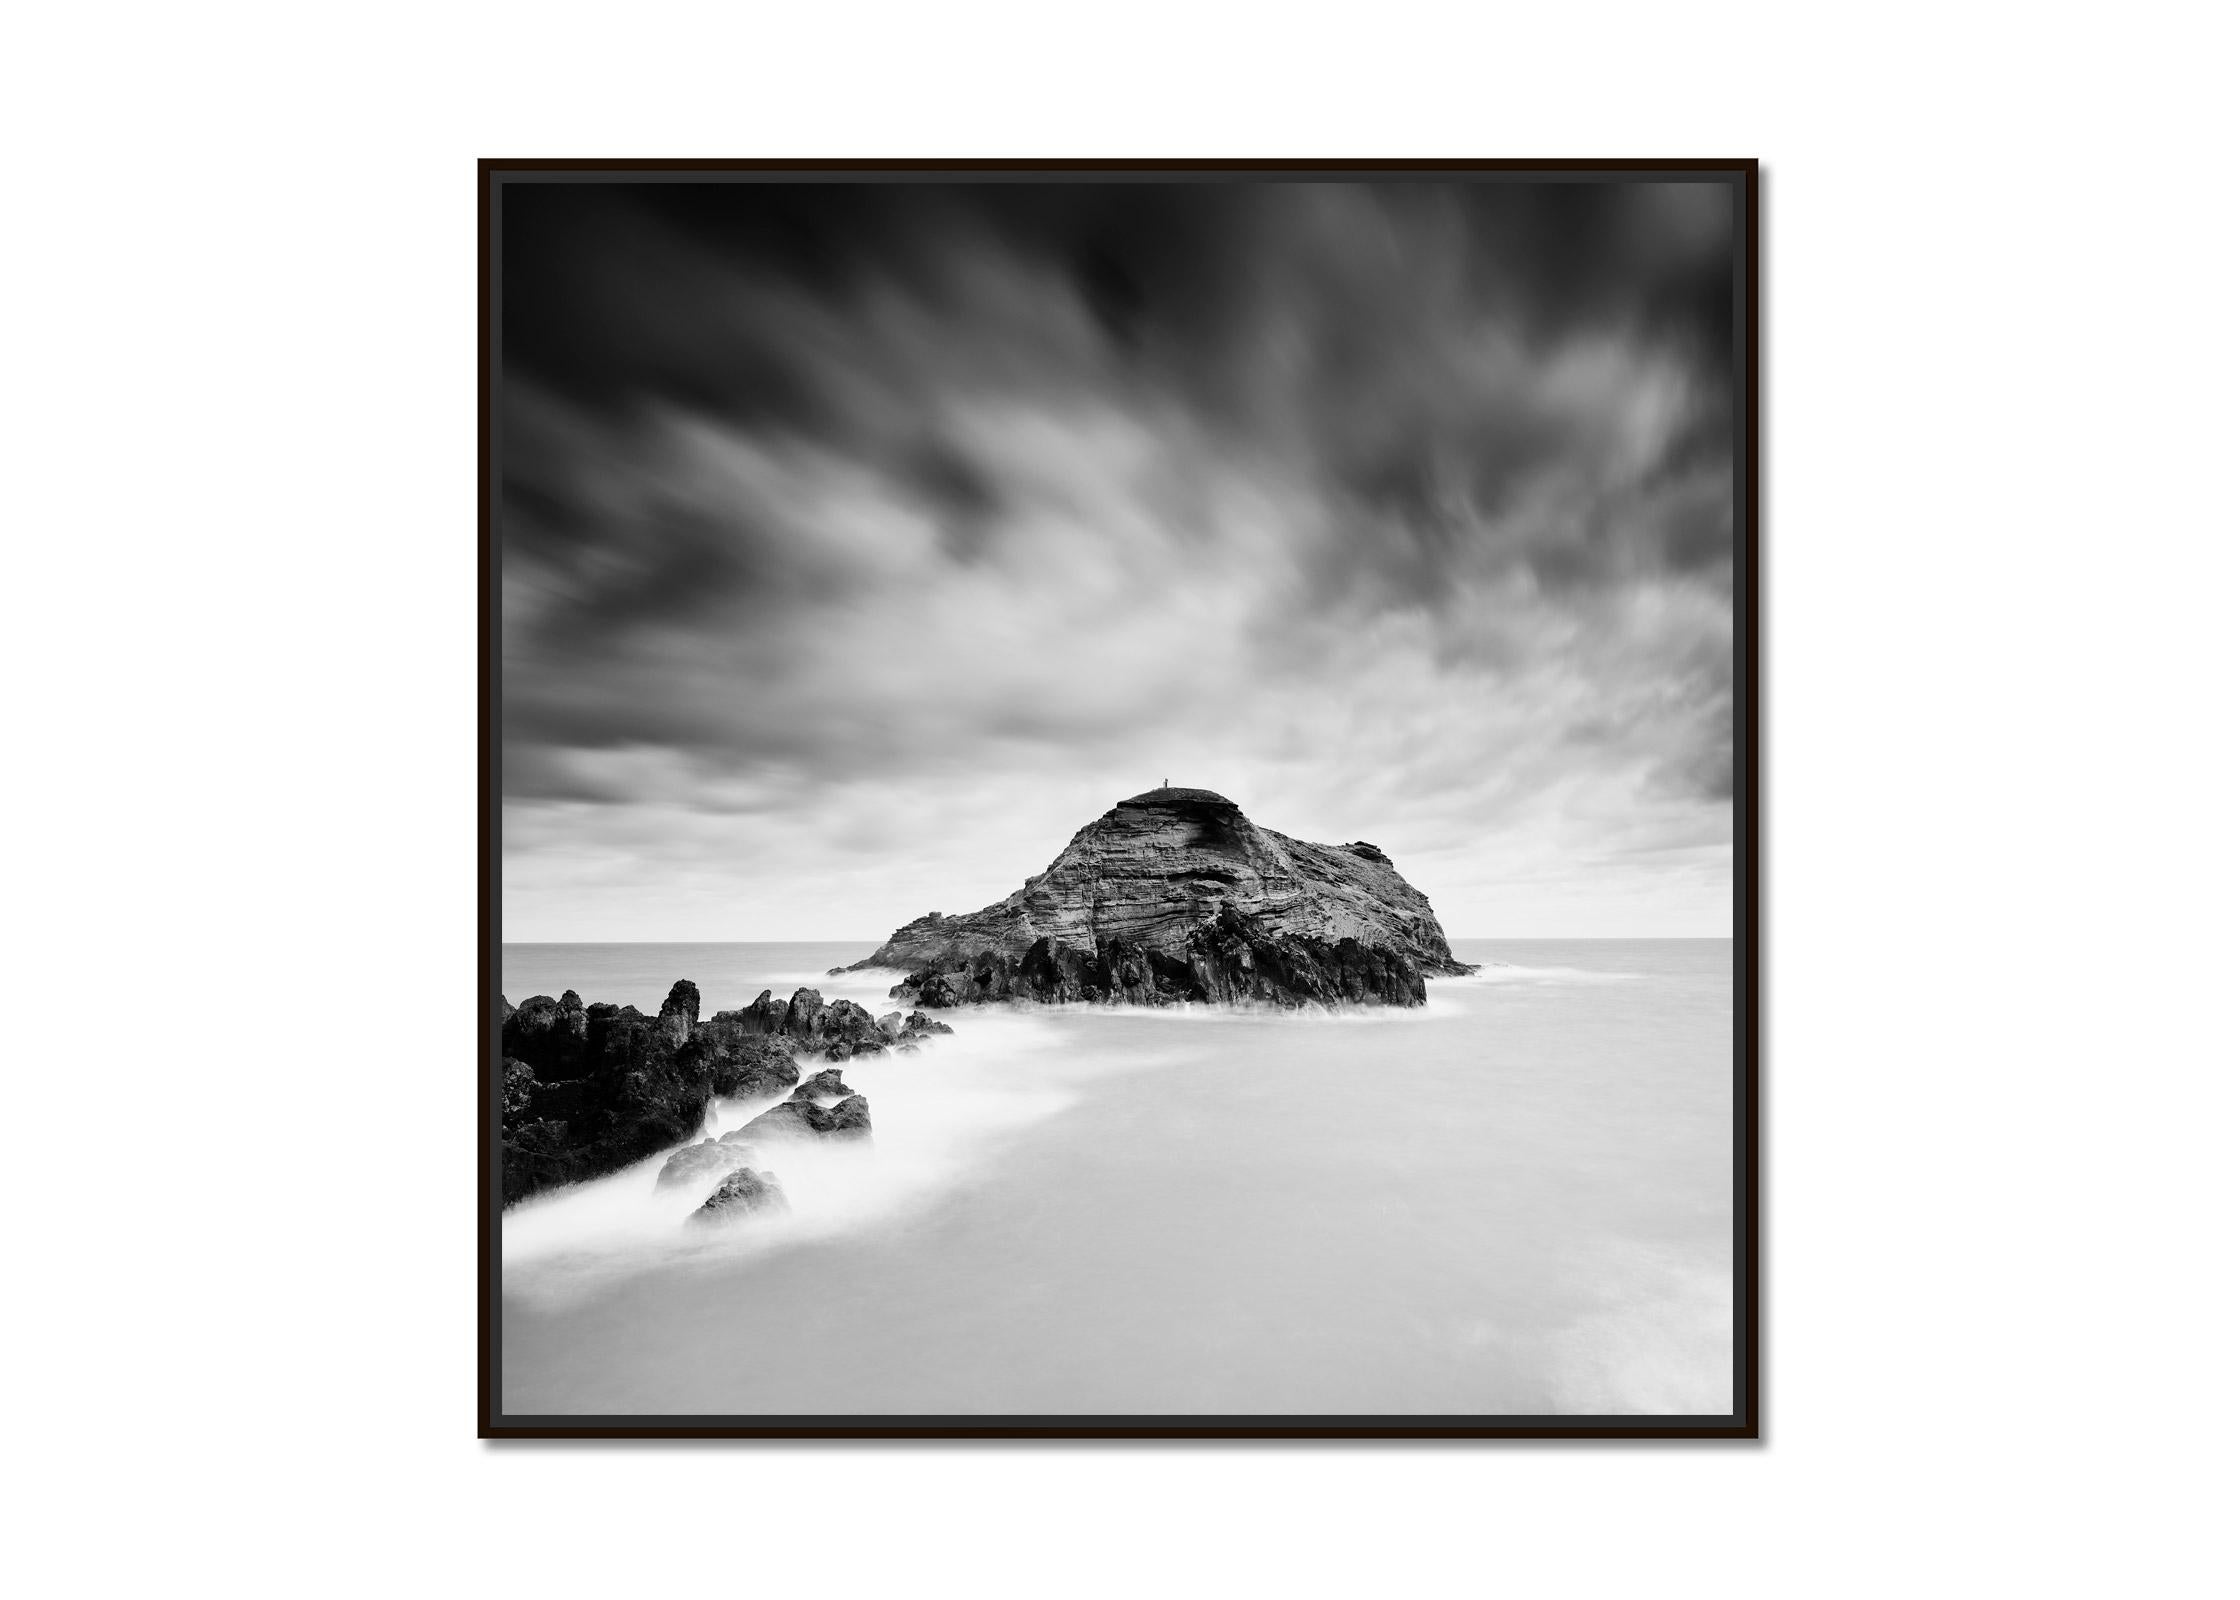 Ilheu Mole at Porto Moniz Portugal, black and white art photography, landscape - Photograph by Gerald Berghammer